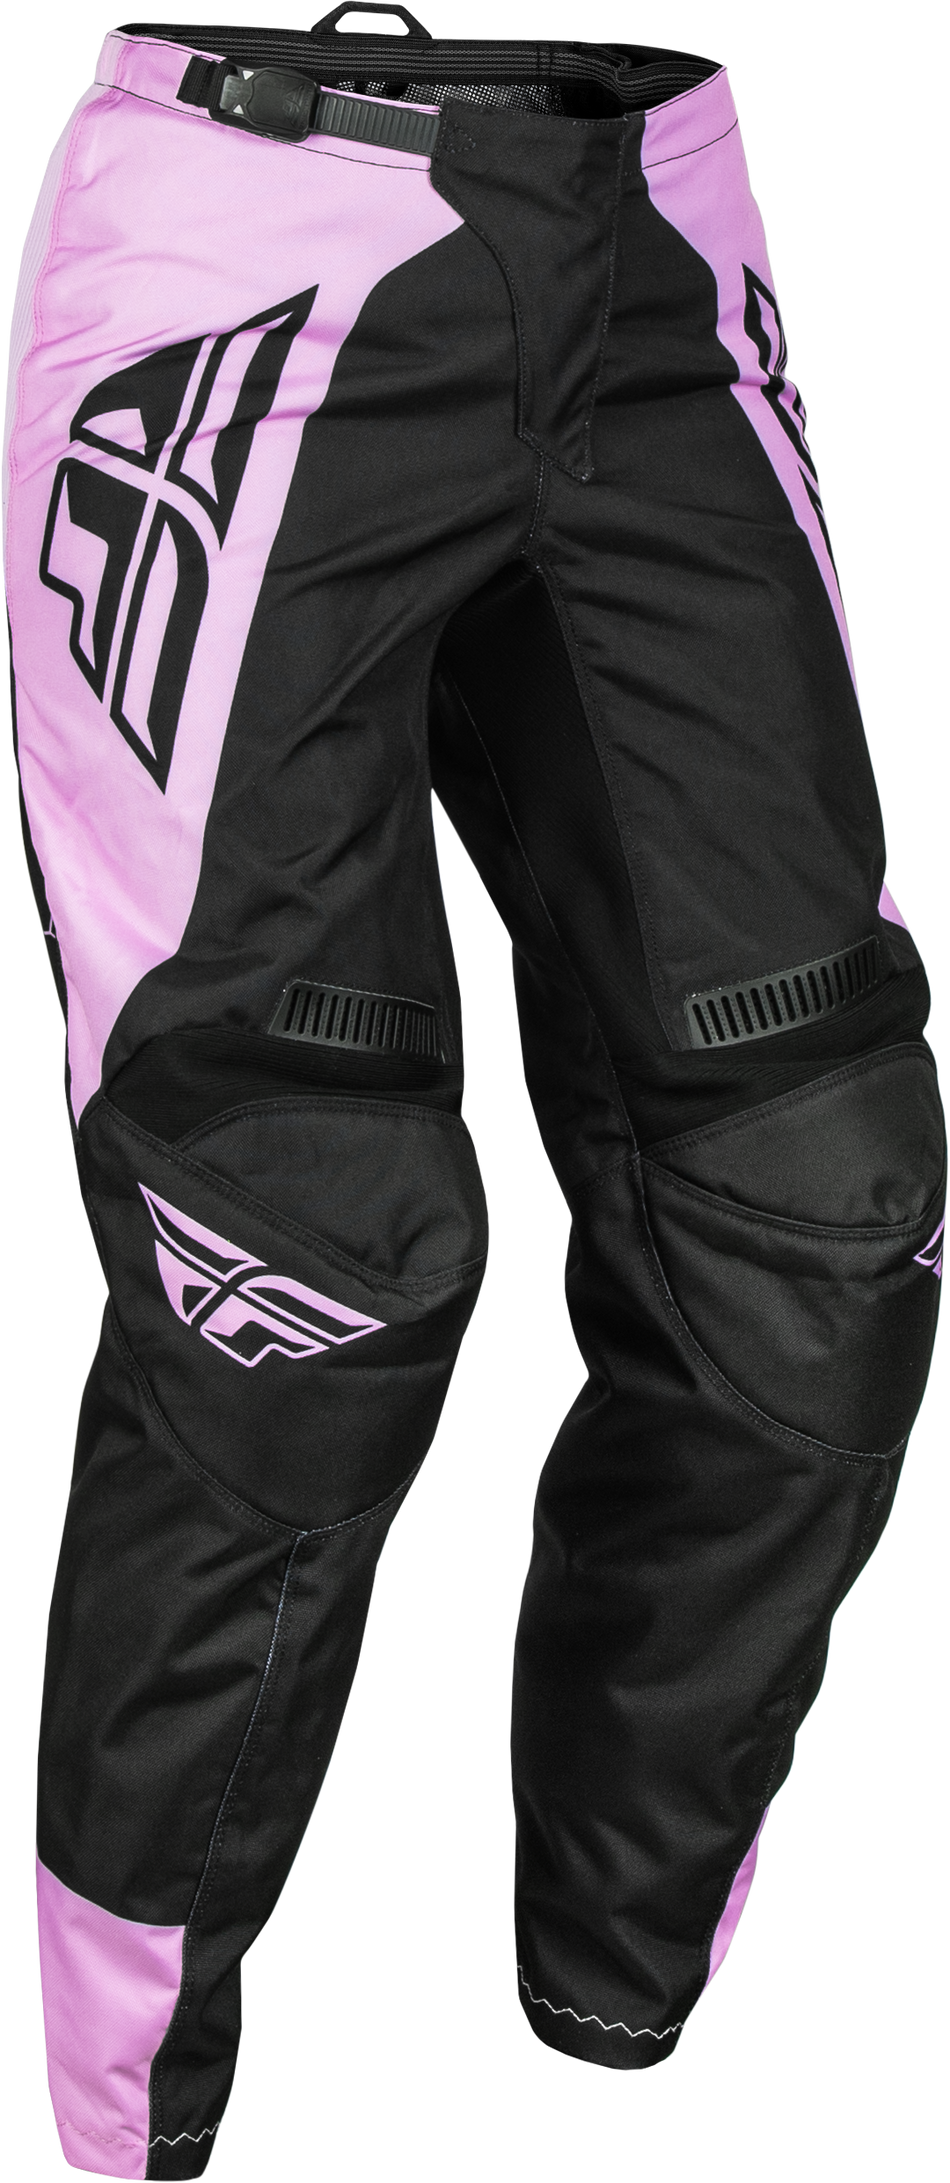 FLY RACING Women's F-16 Pants Black/Lavender Sz 0/02 377-83100